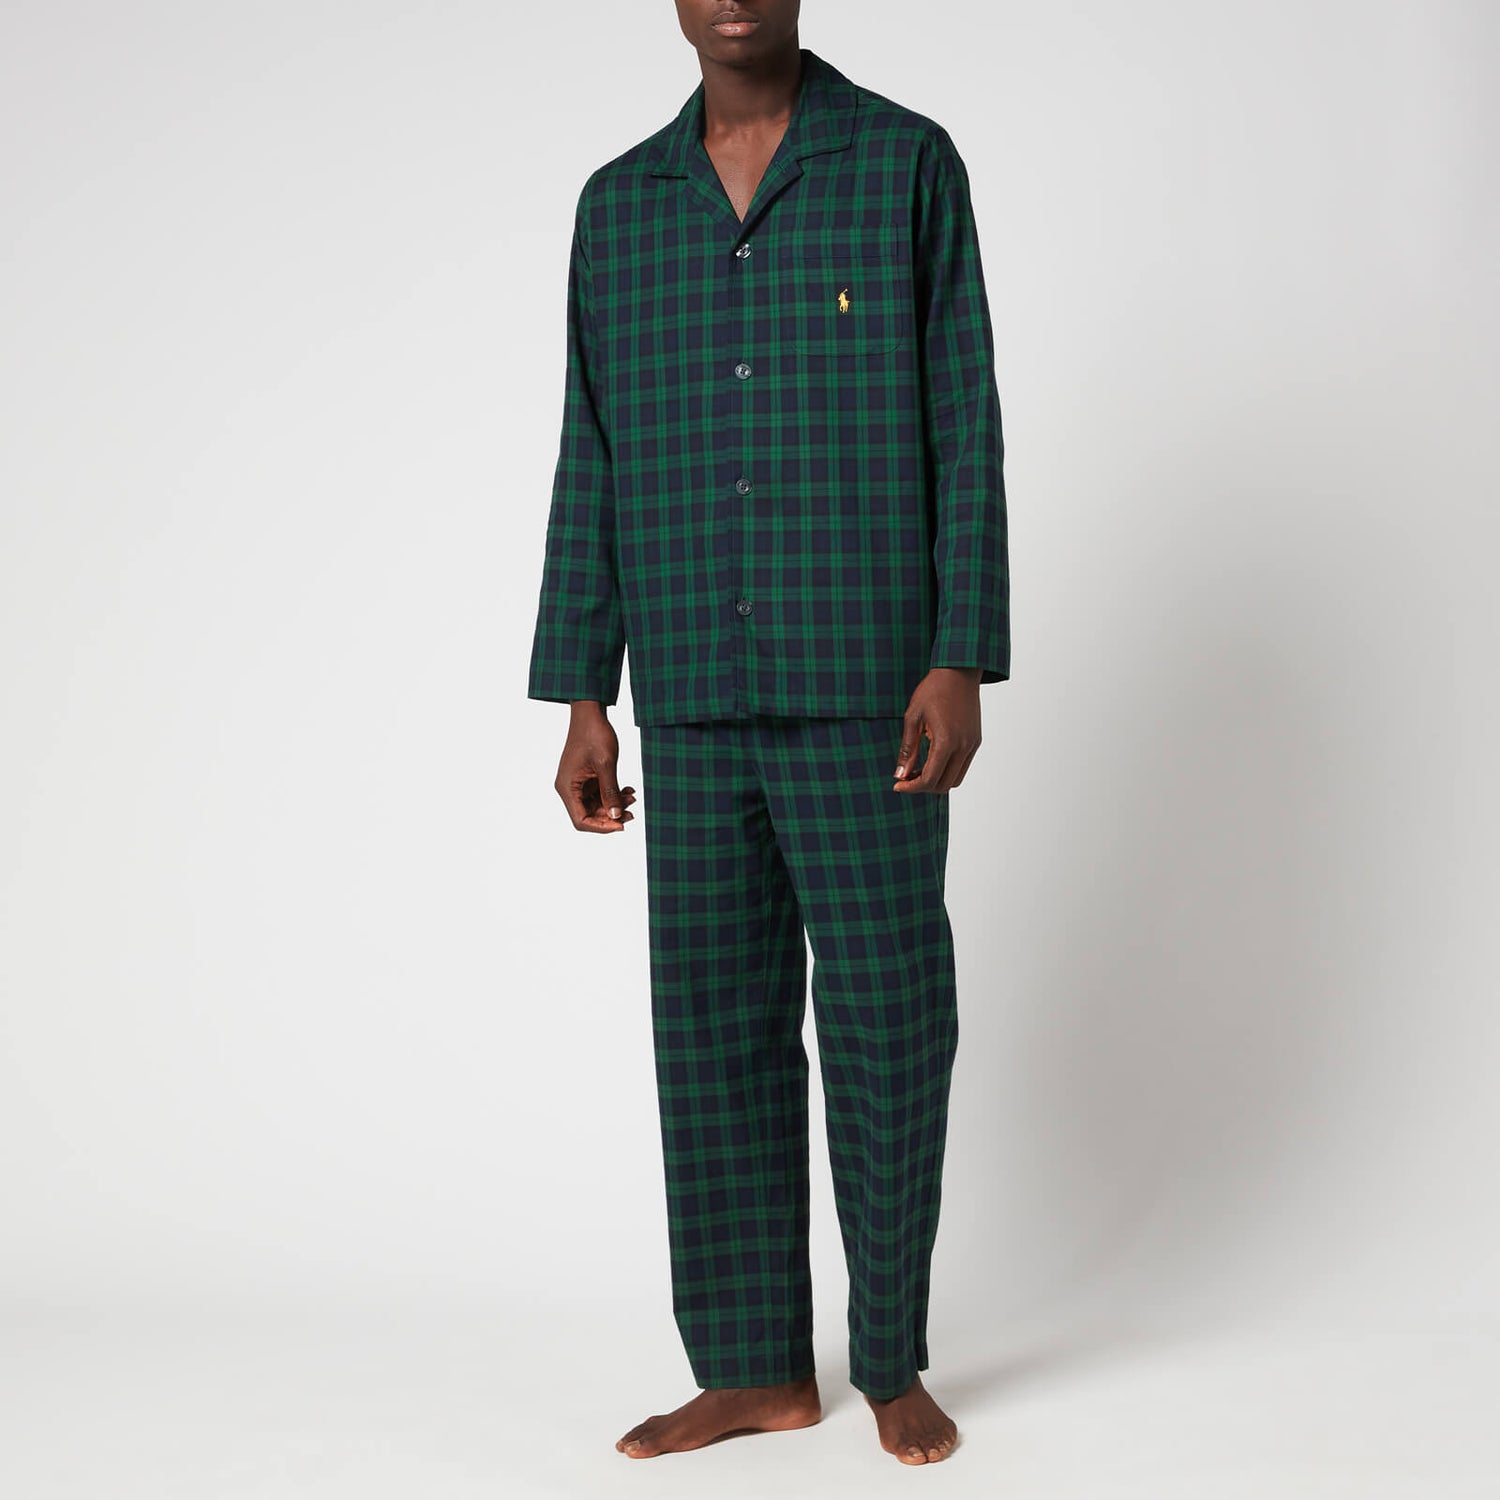 Polo Ralph Lauren Men's Long Sleeve Pajama Set - Navy/Green Plaid